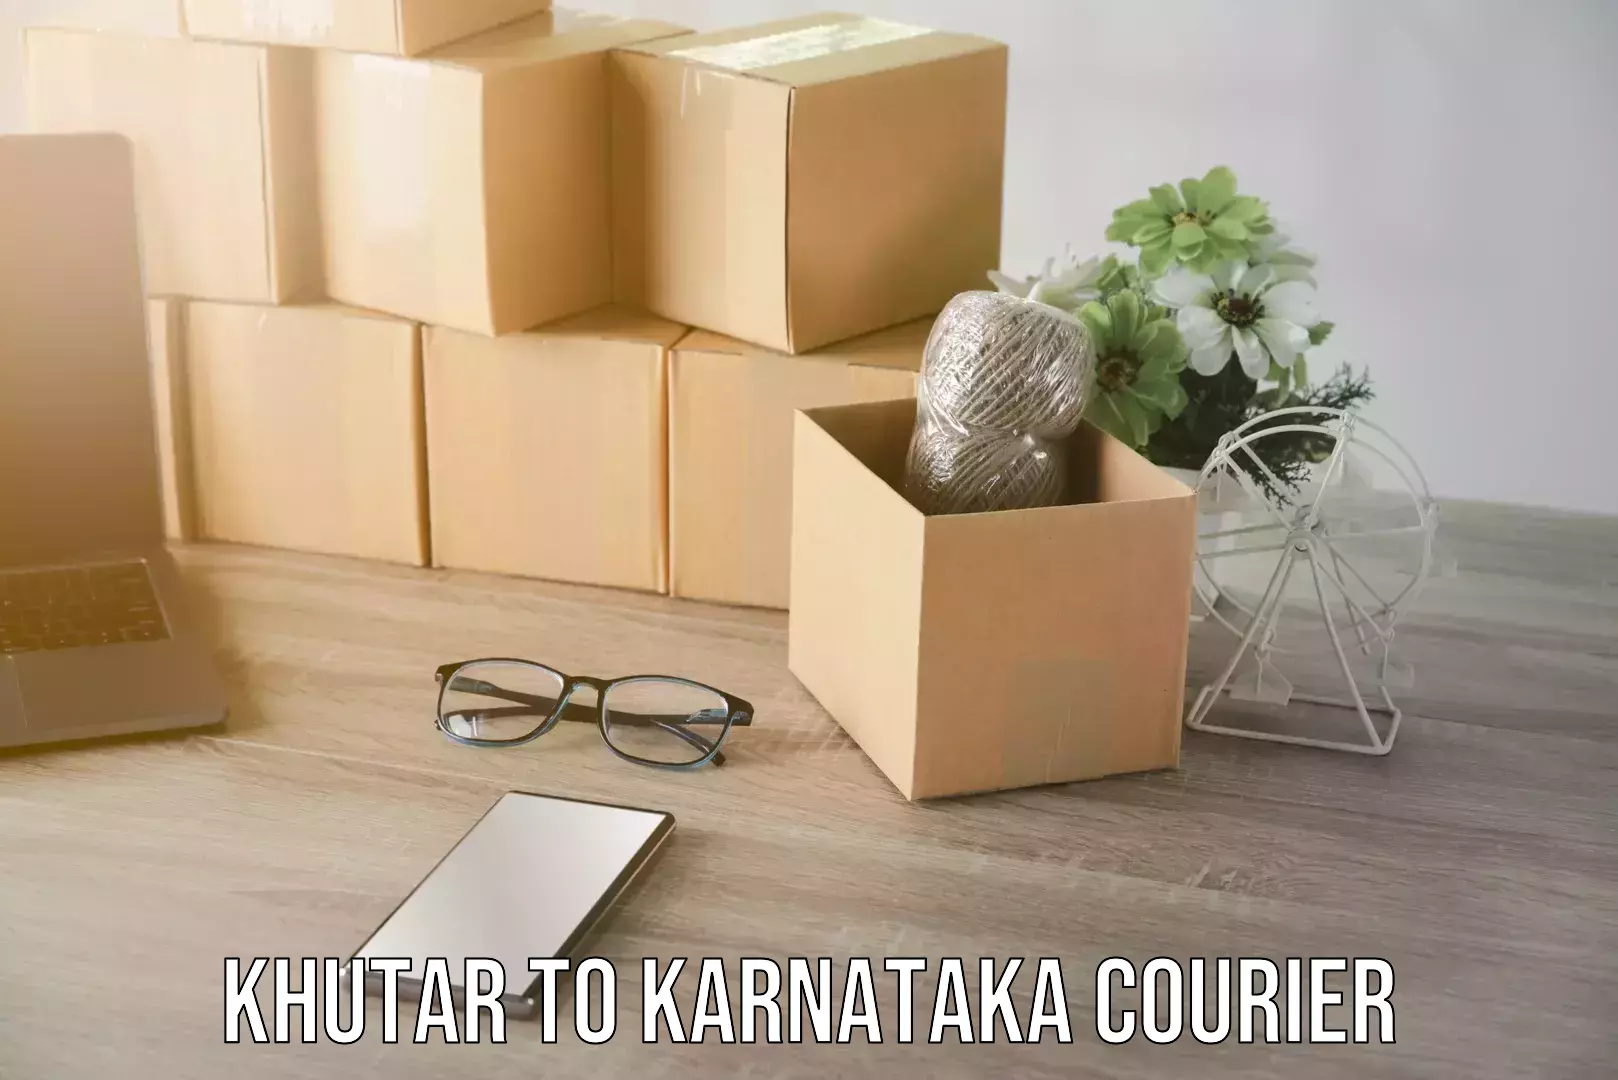 Efficient moving company Khutar to Karnataka